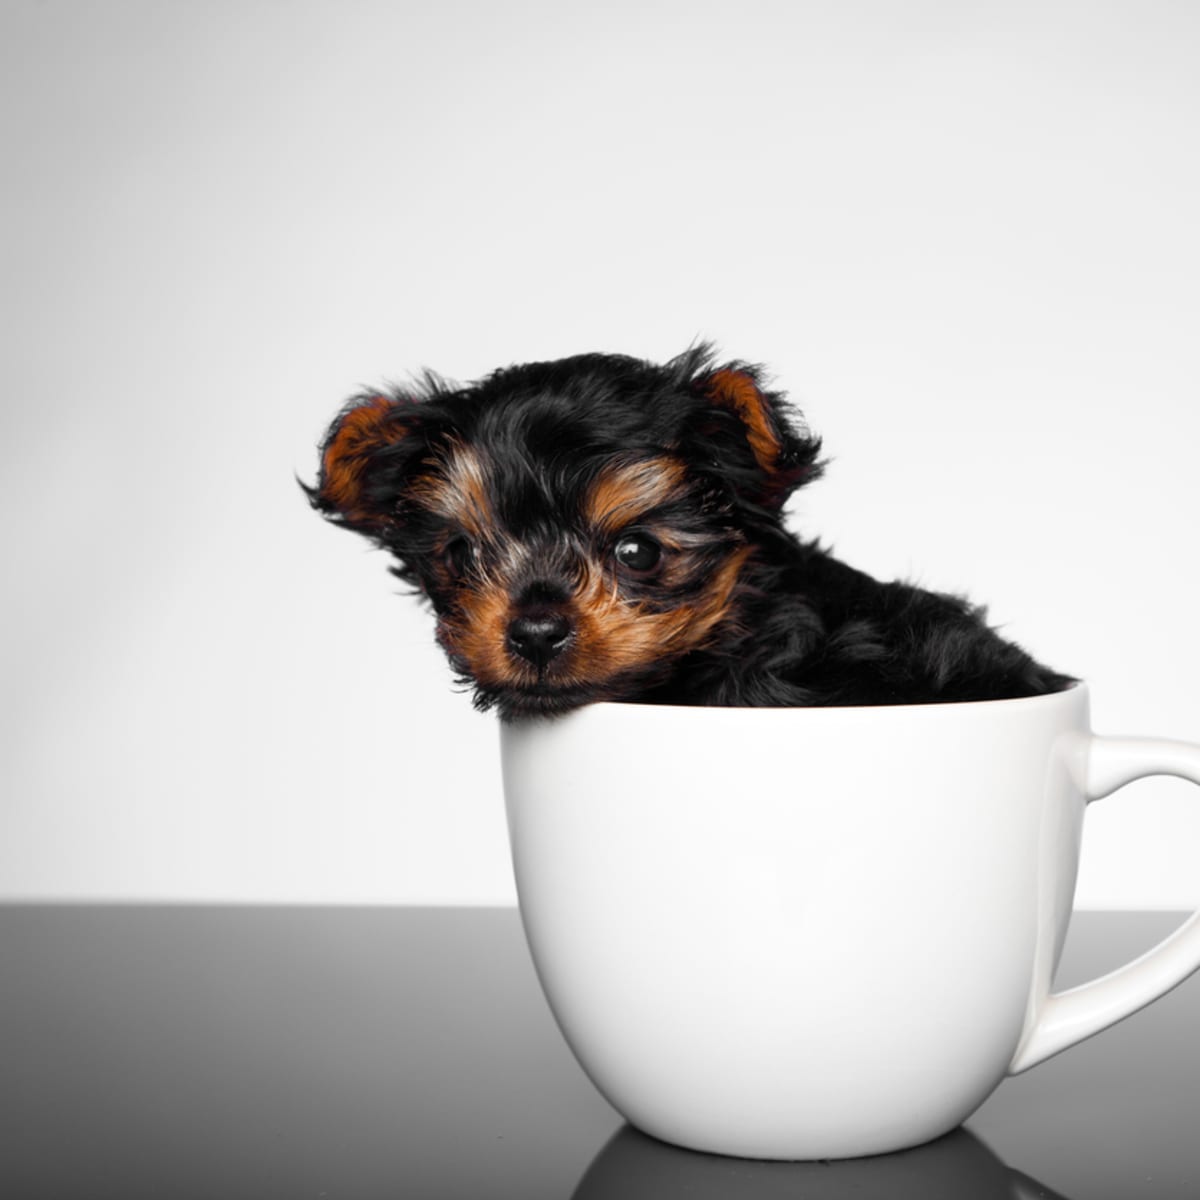 are teacup pomeranians good pets